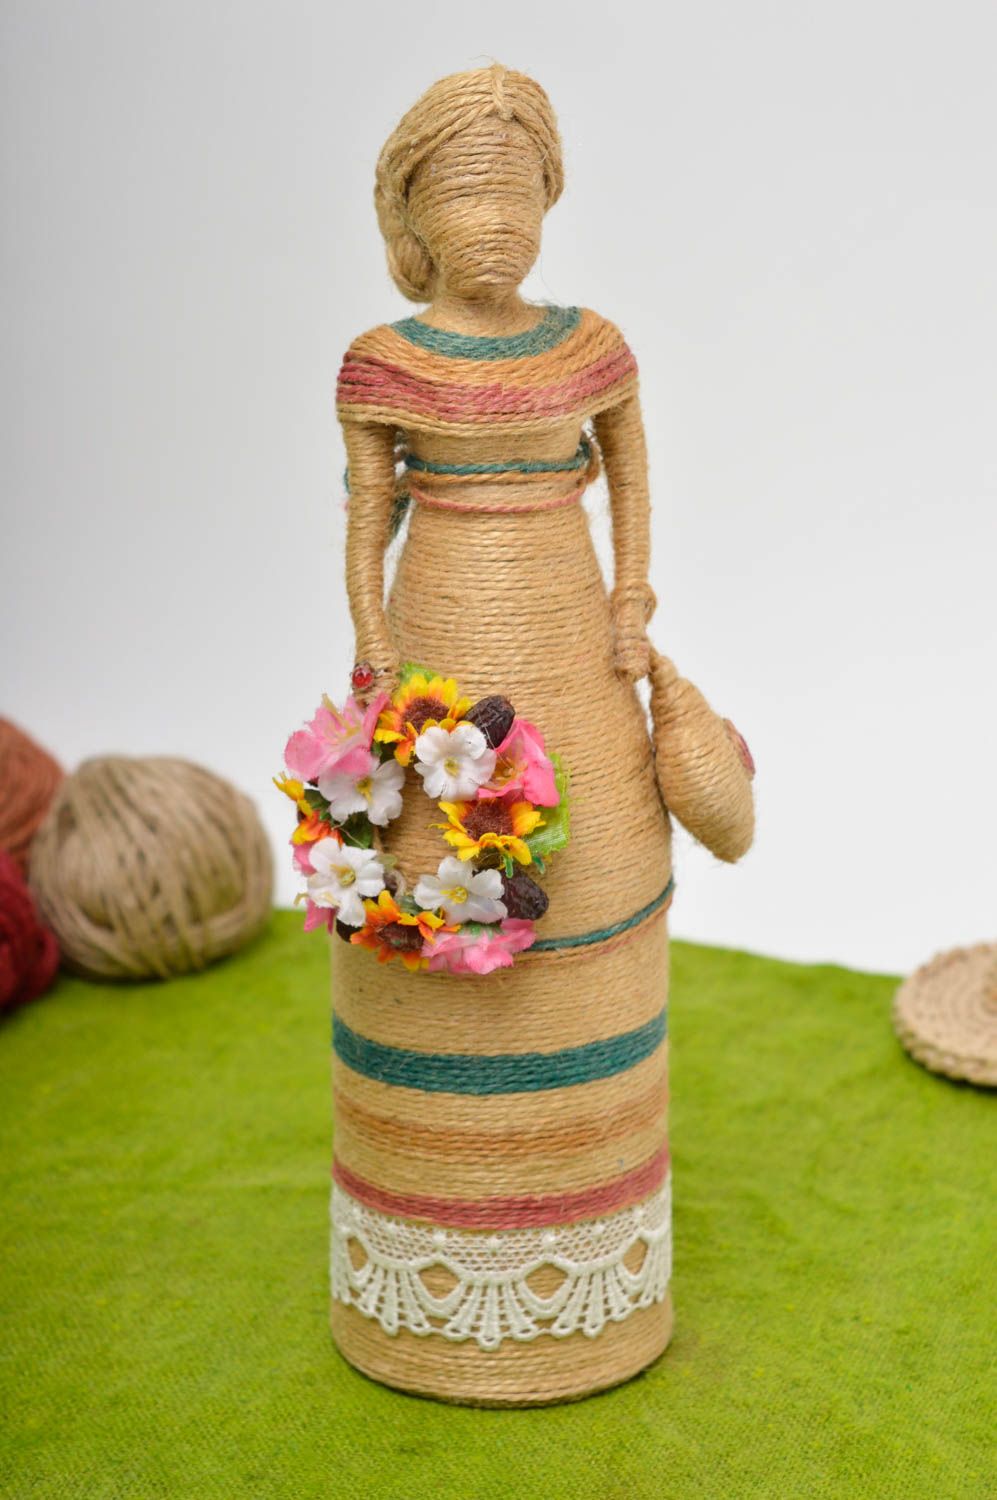 Handmade figurine designer souvenir gift ideas decorative use only decor ideas photo 1